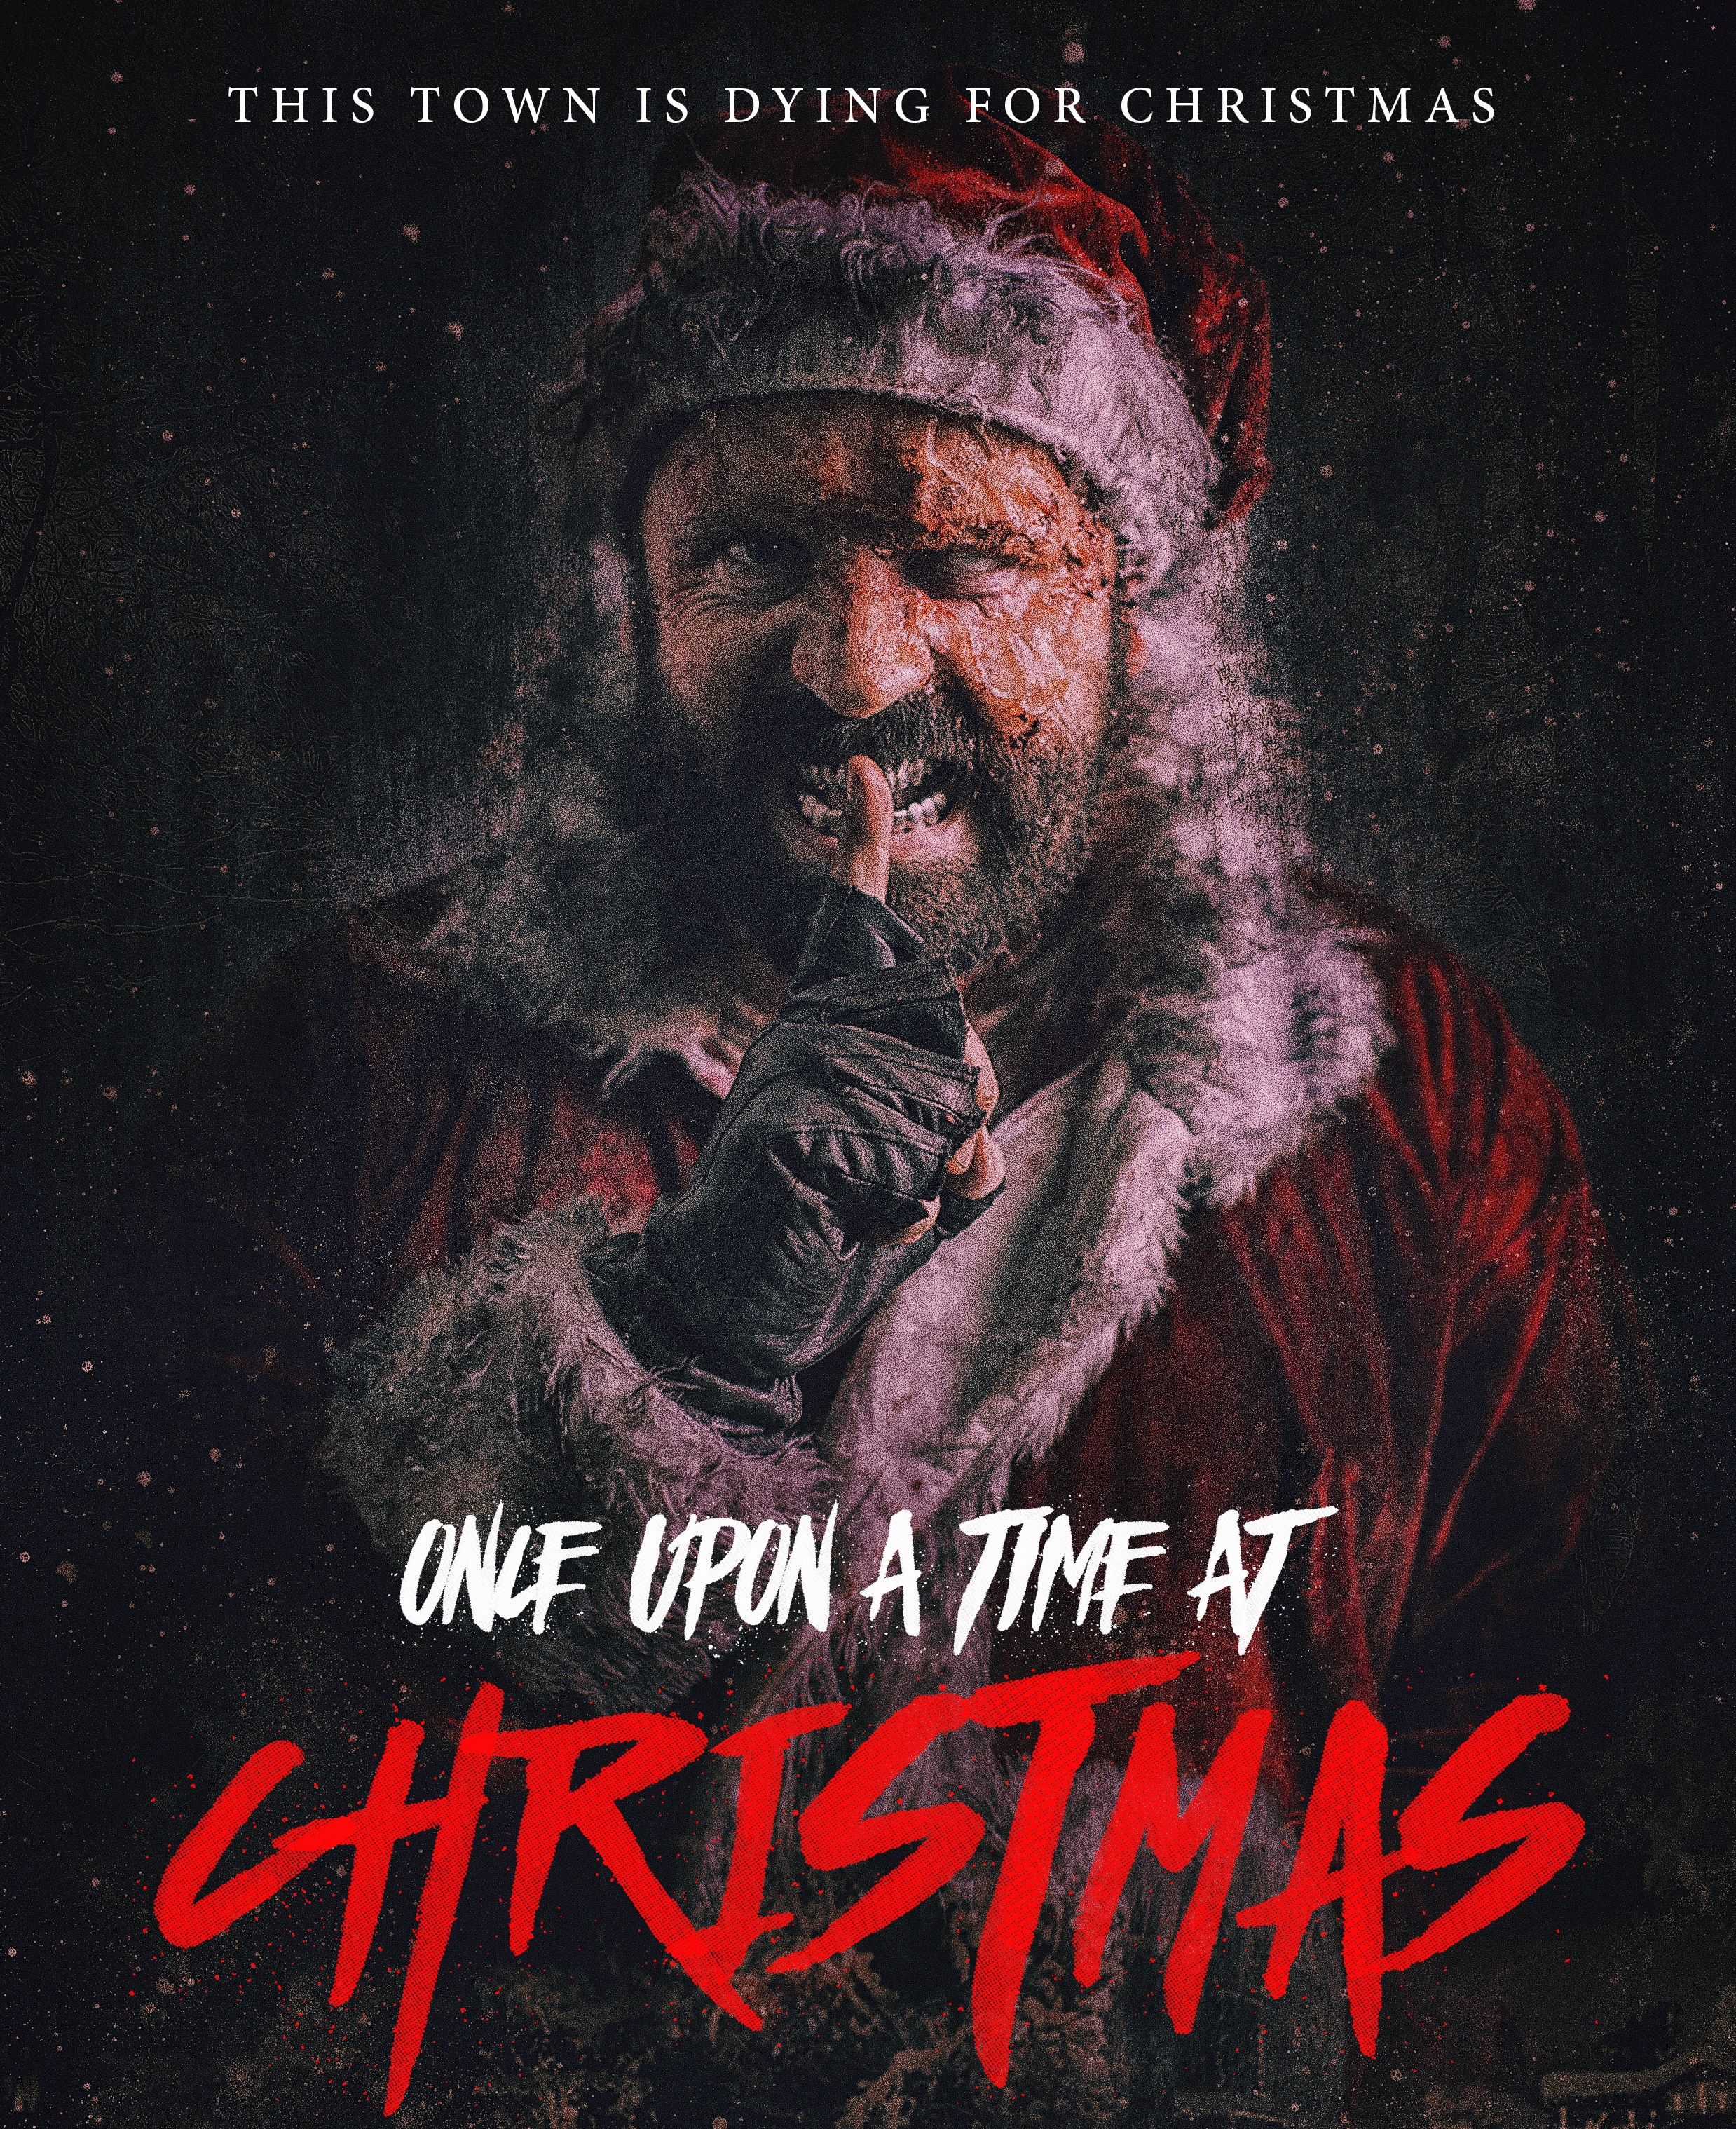 Nonton film Once Upon a Time at Christmas layarkaca21 indoxx1 ganool online streaming terbaru